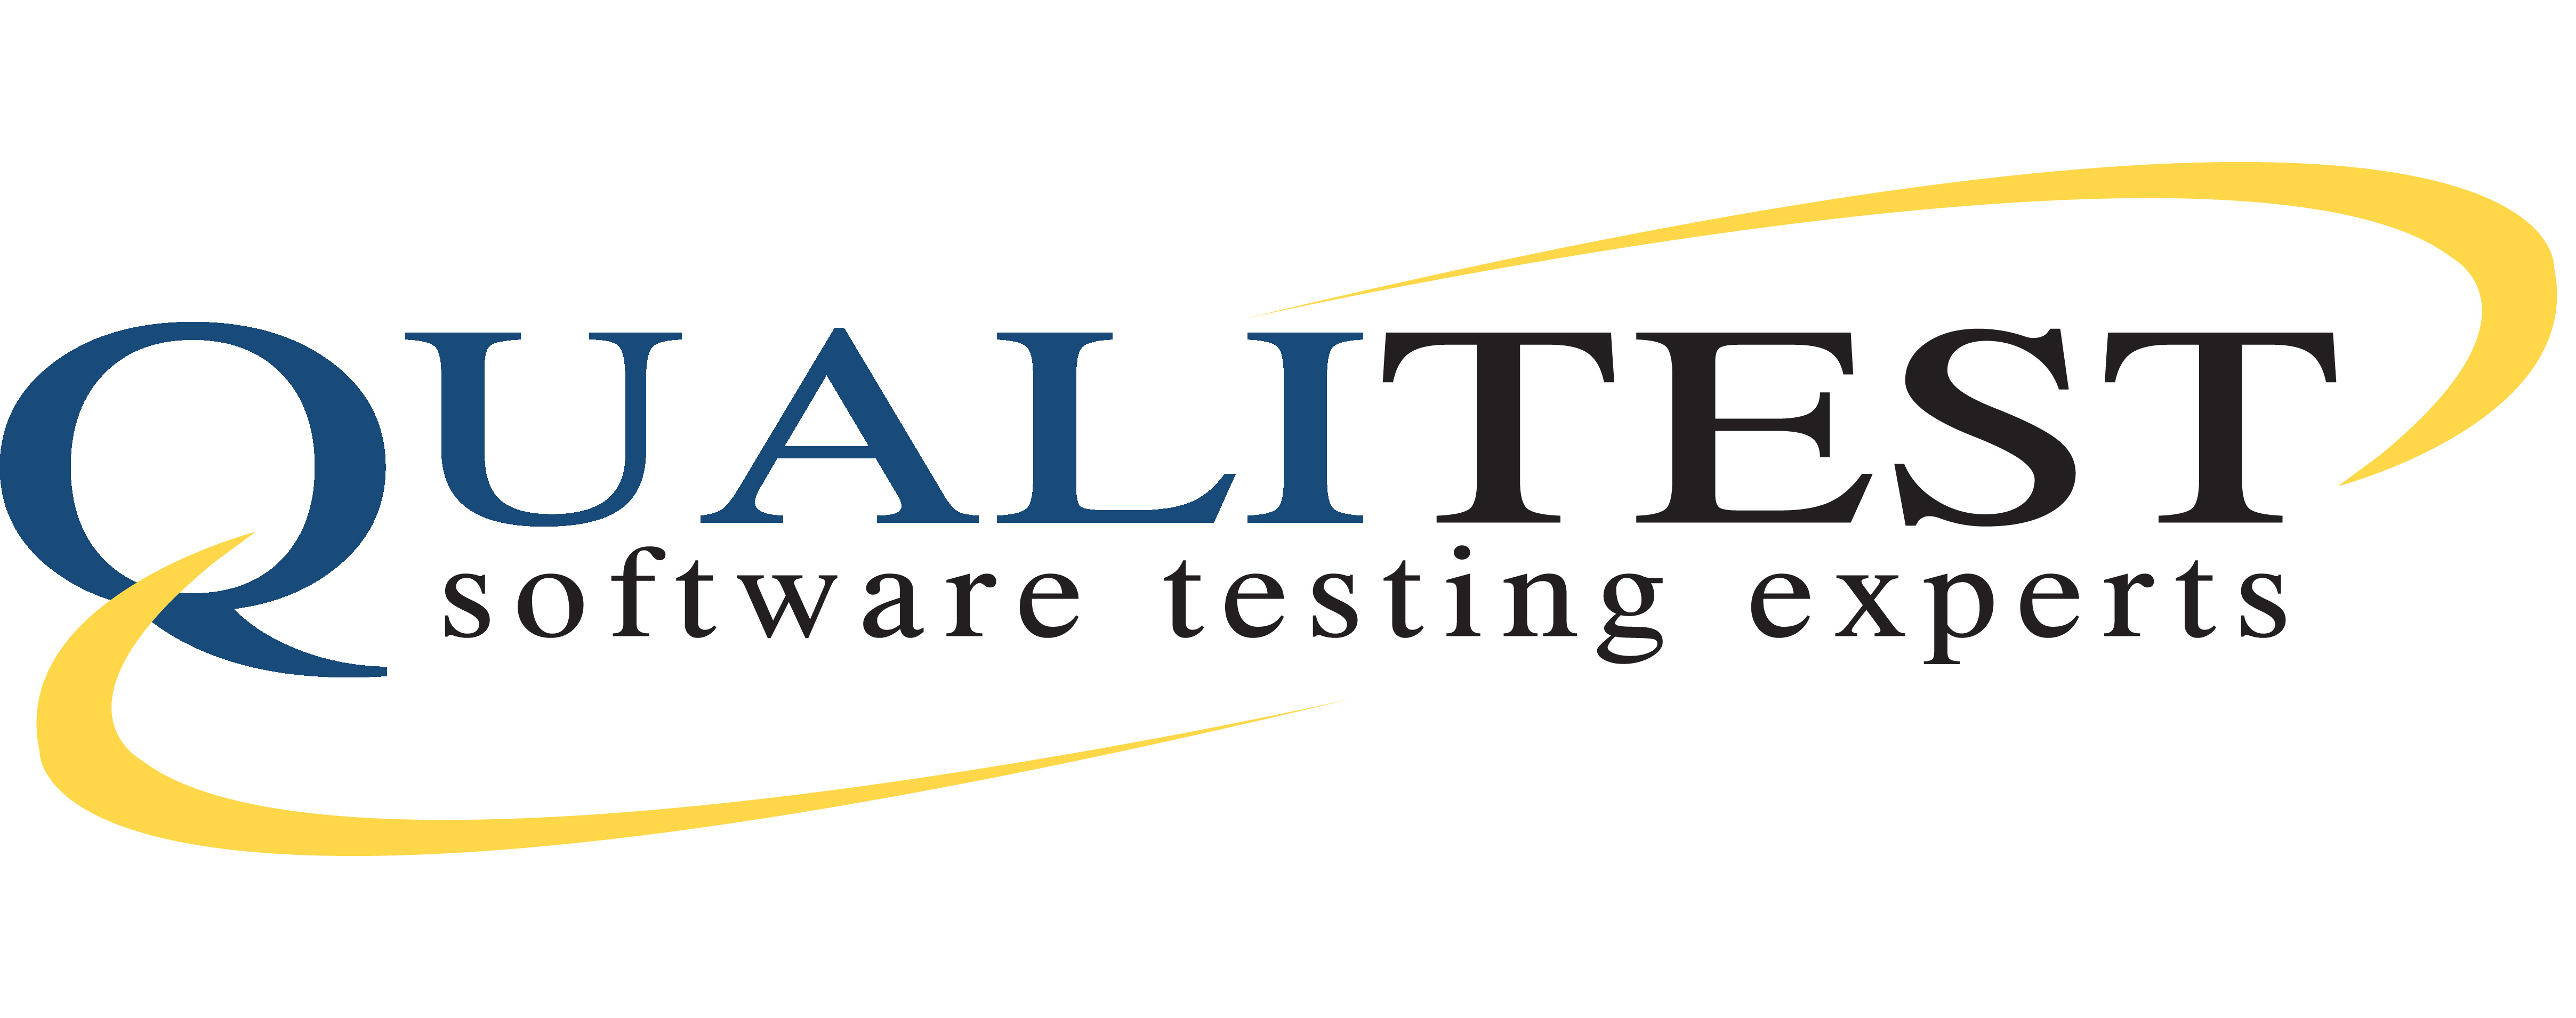 QualiTest, the world's second-largest QA testing company